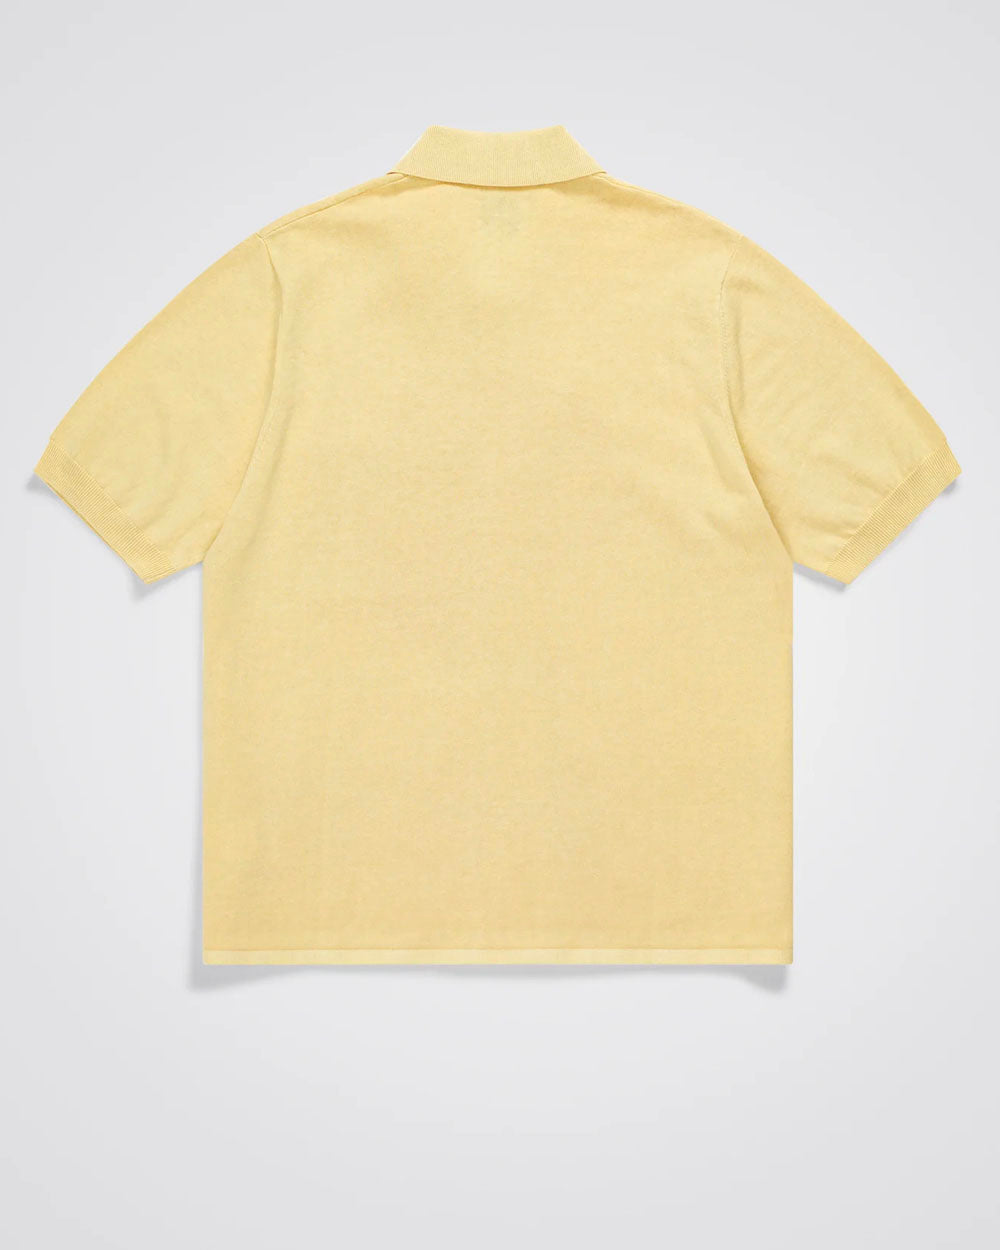 Rollo Cotton Linen SS Shirt Sunwashed Yellow